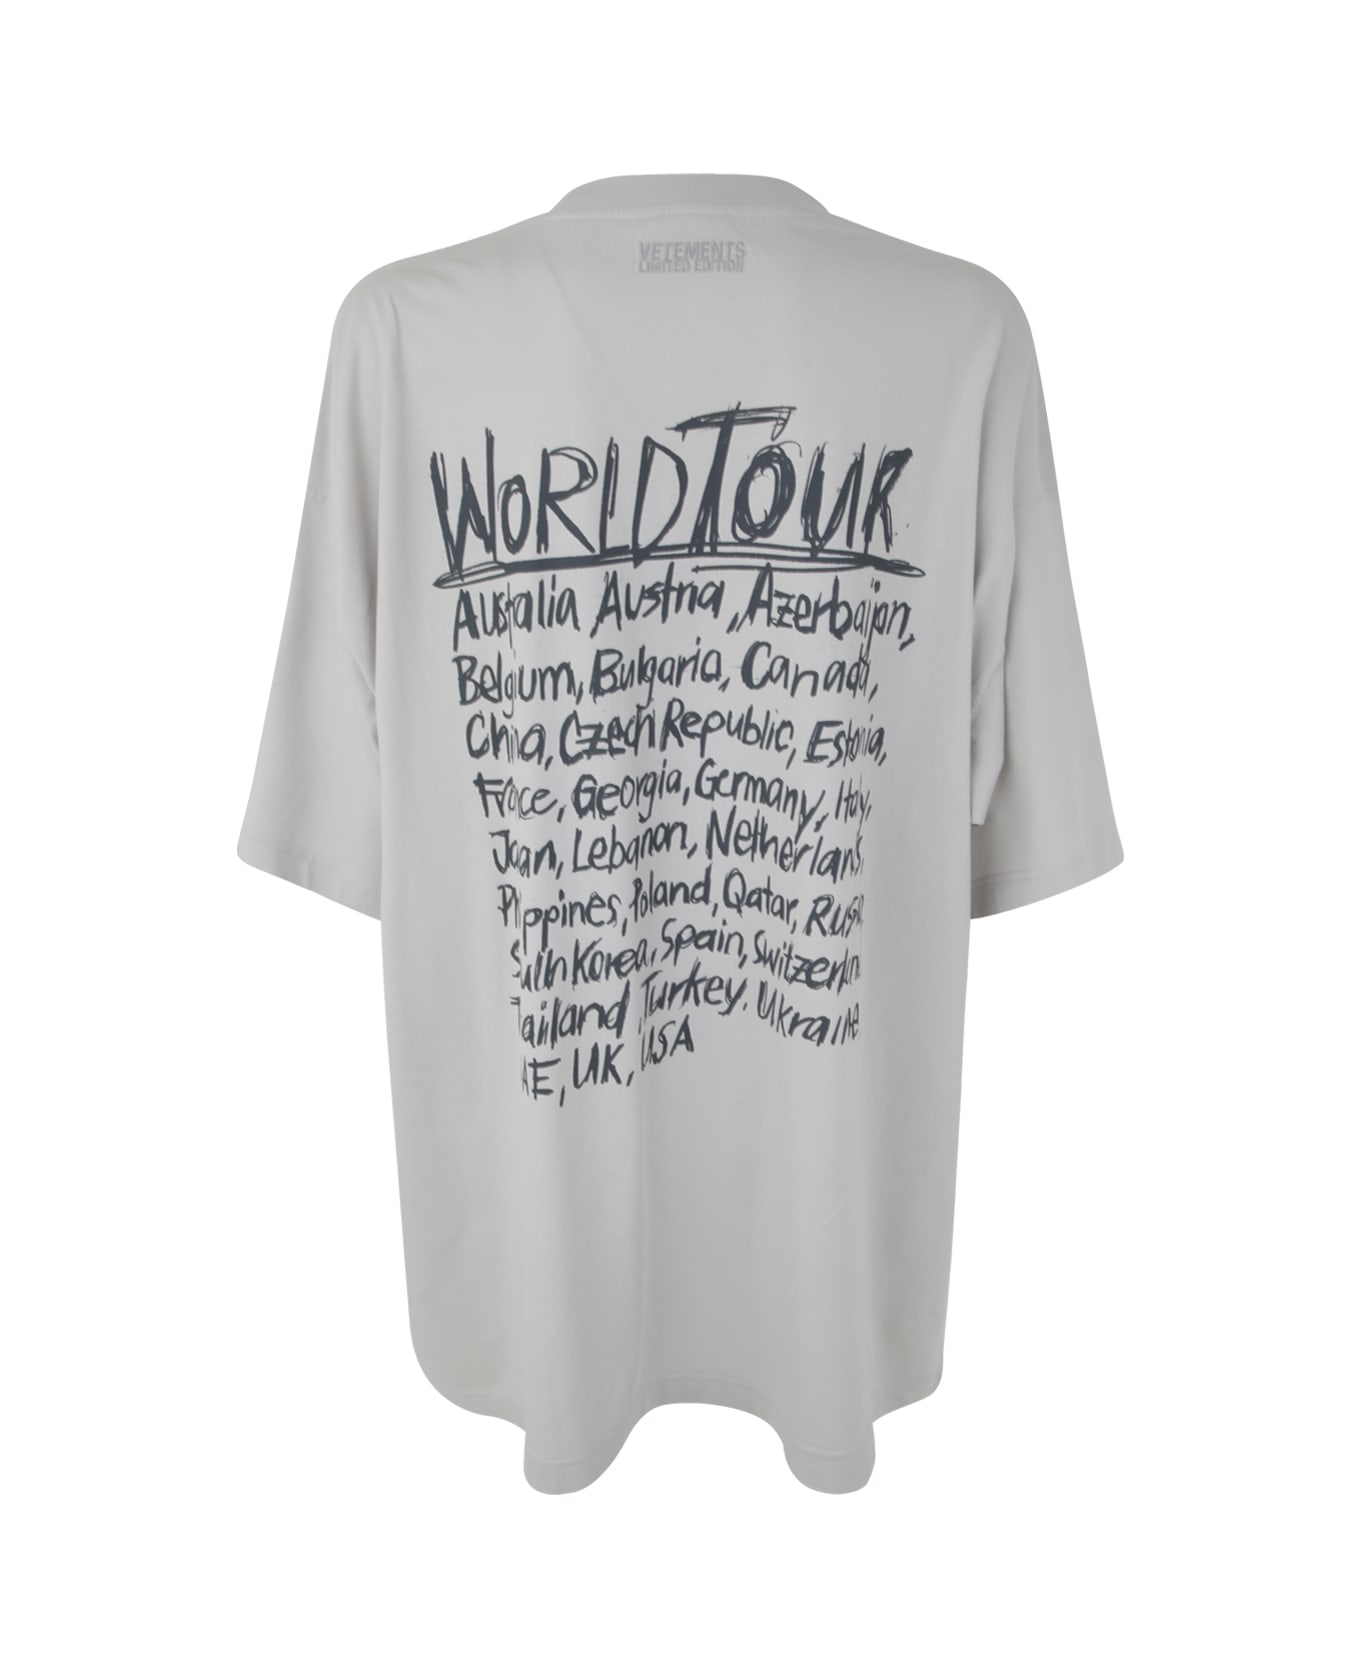 VETEMENTS Worldtour Logo T-shirt - Oyster Mushroom